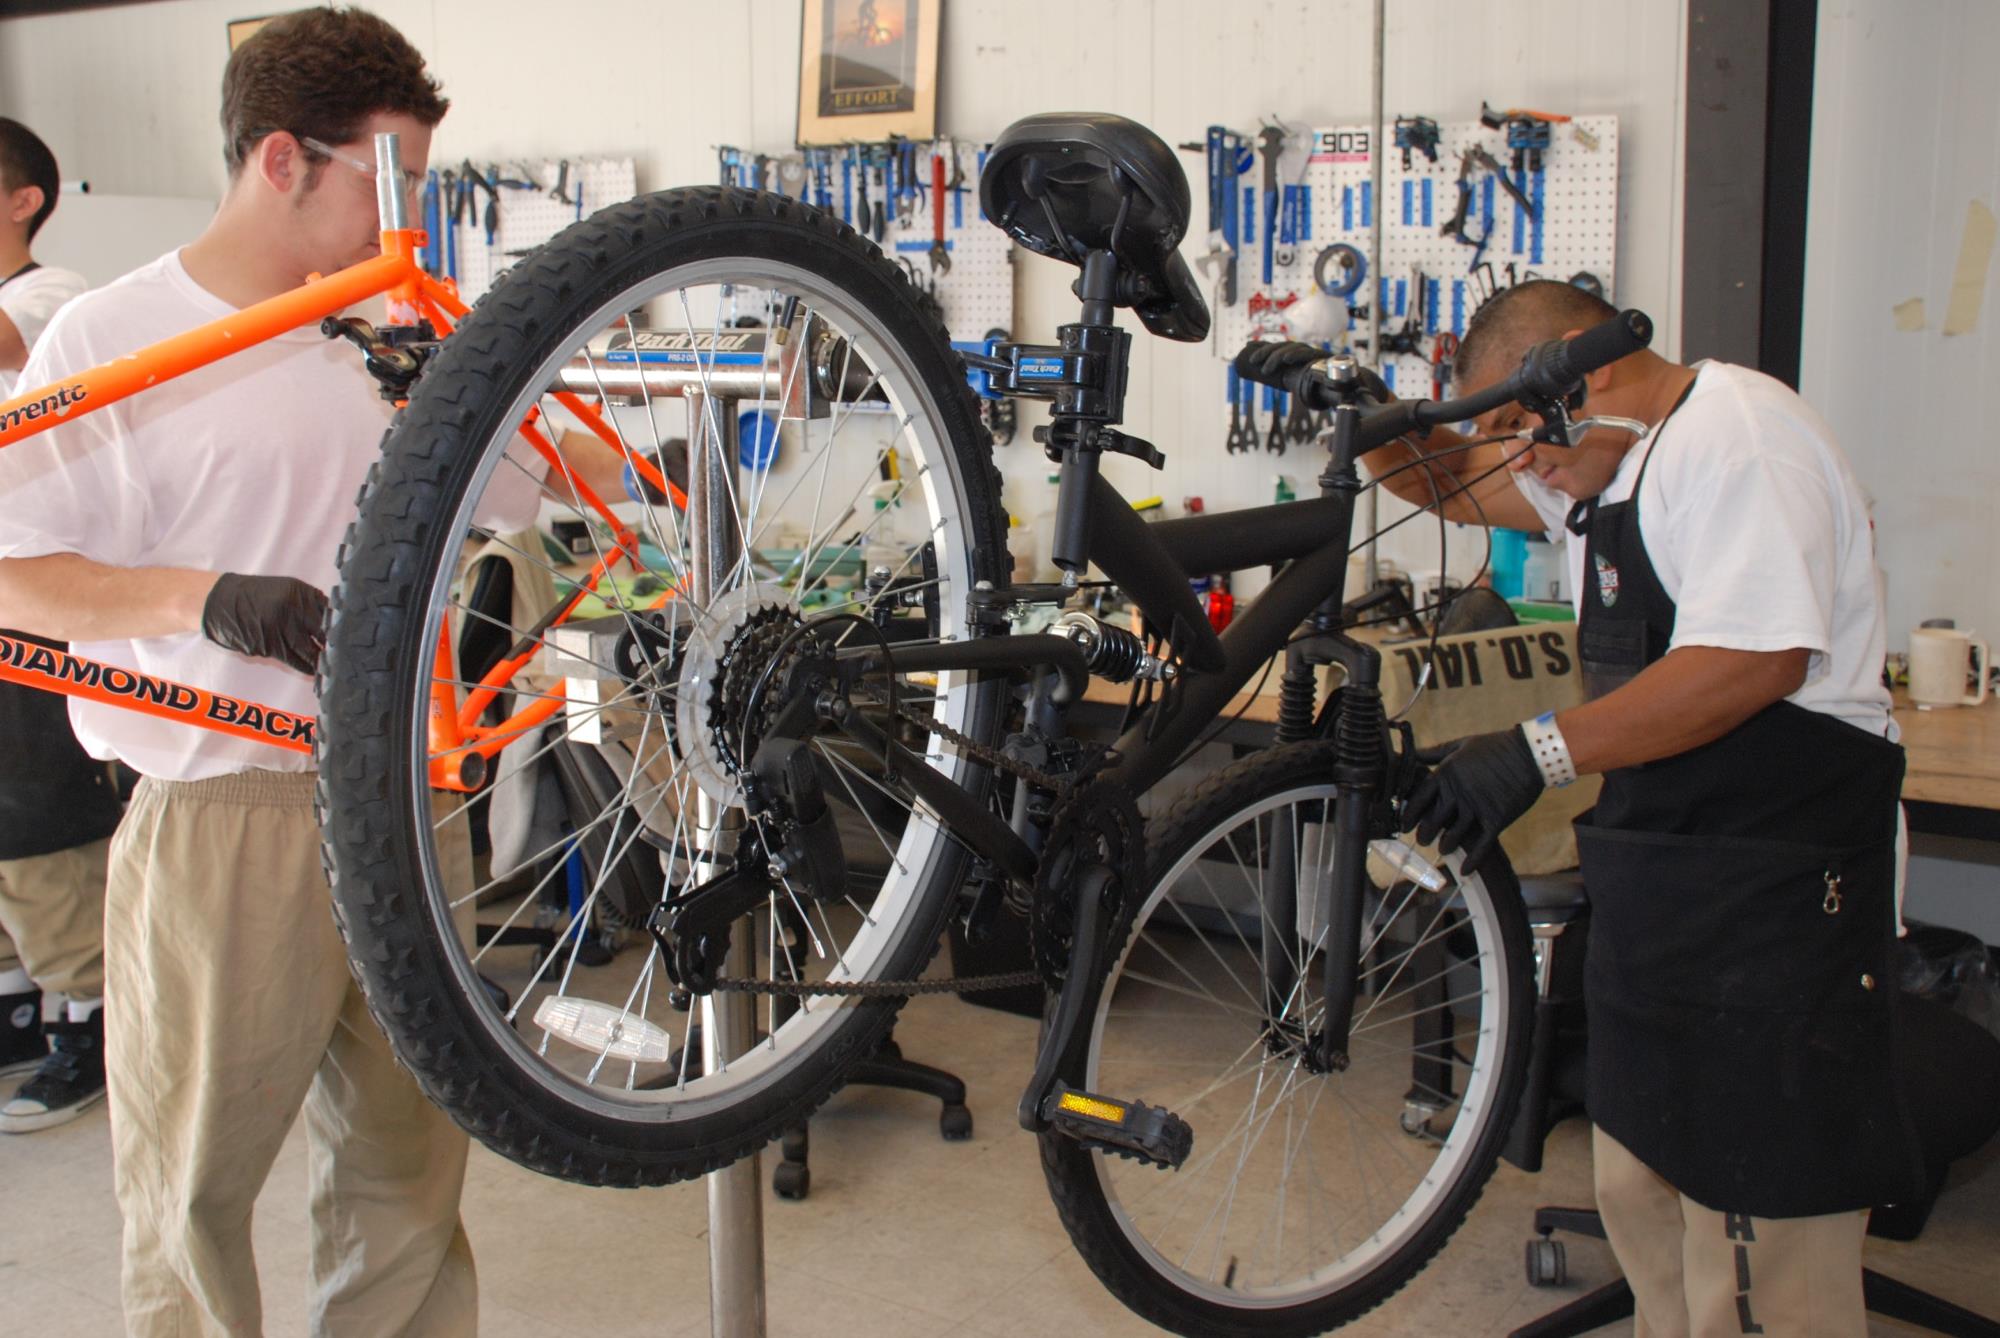 2 Bicycle Program students fixing a bike